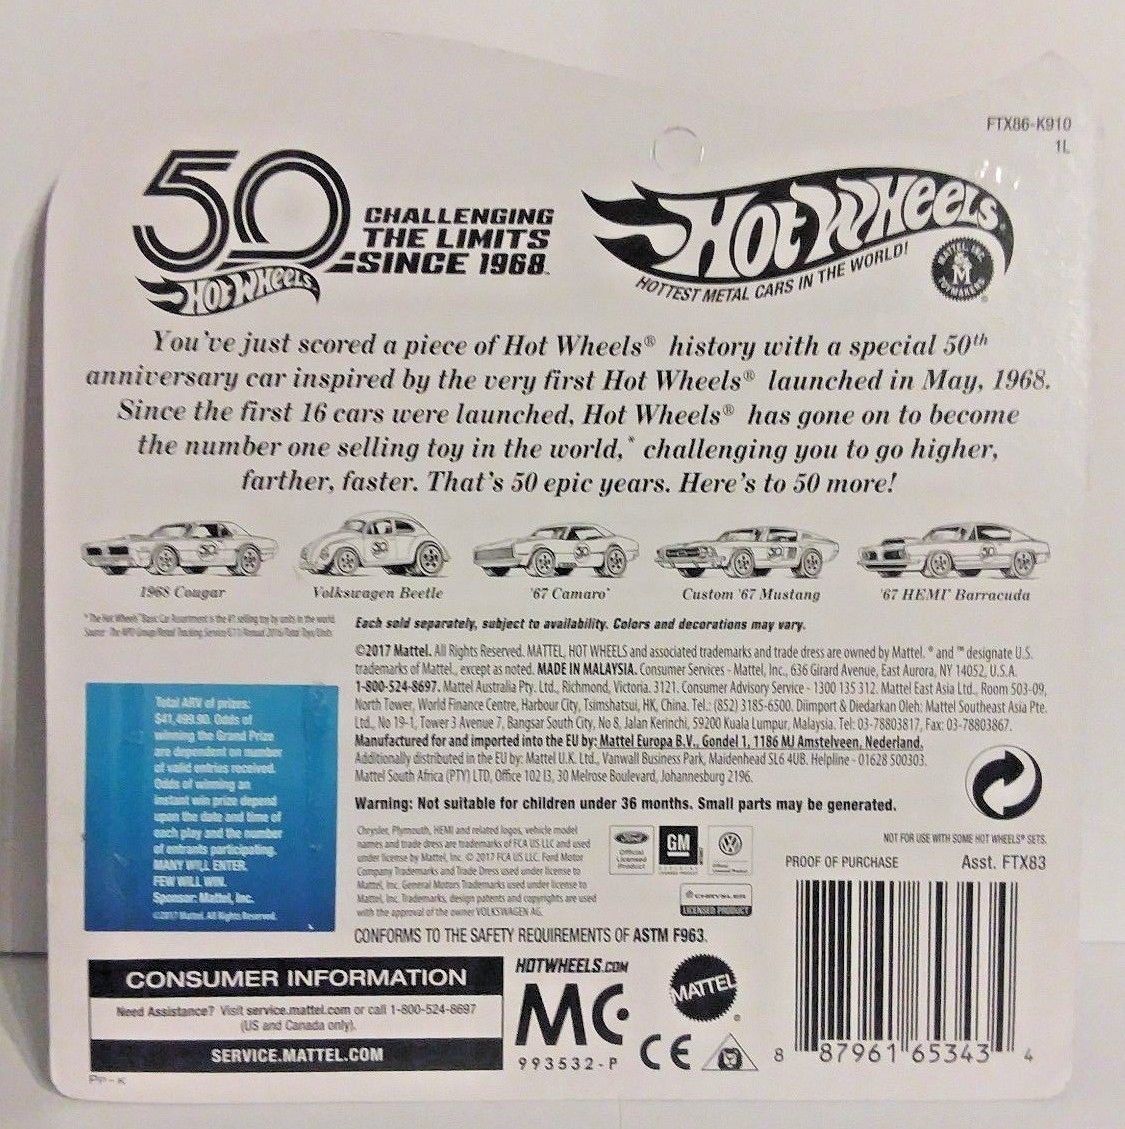 Hot Wheels 2018 - 50th Anniversary Originals Collection # 3/5 - '67 Camaro - Spectraflame, Blue - RetroRL Wheels - Blue Interior - ZAMAC Metal Base - Retro Blister Card & Button